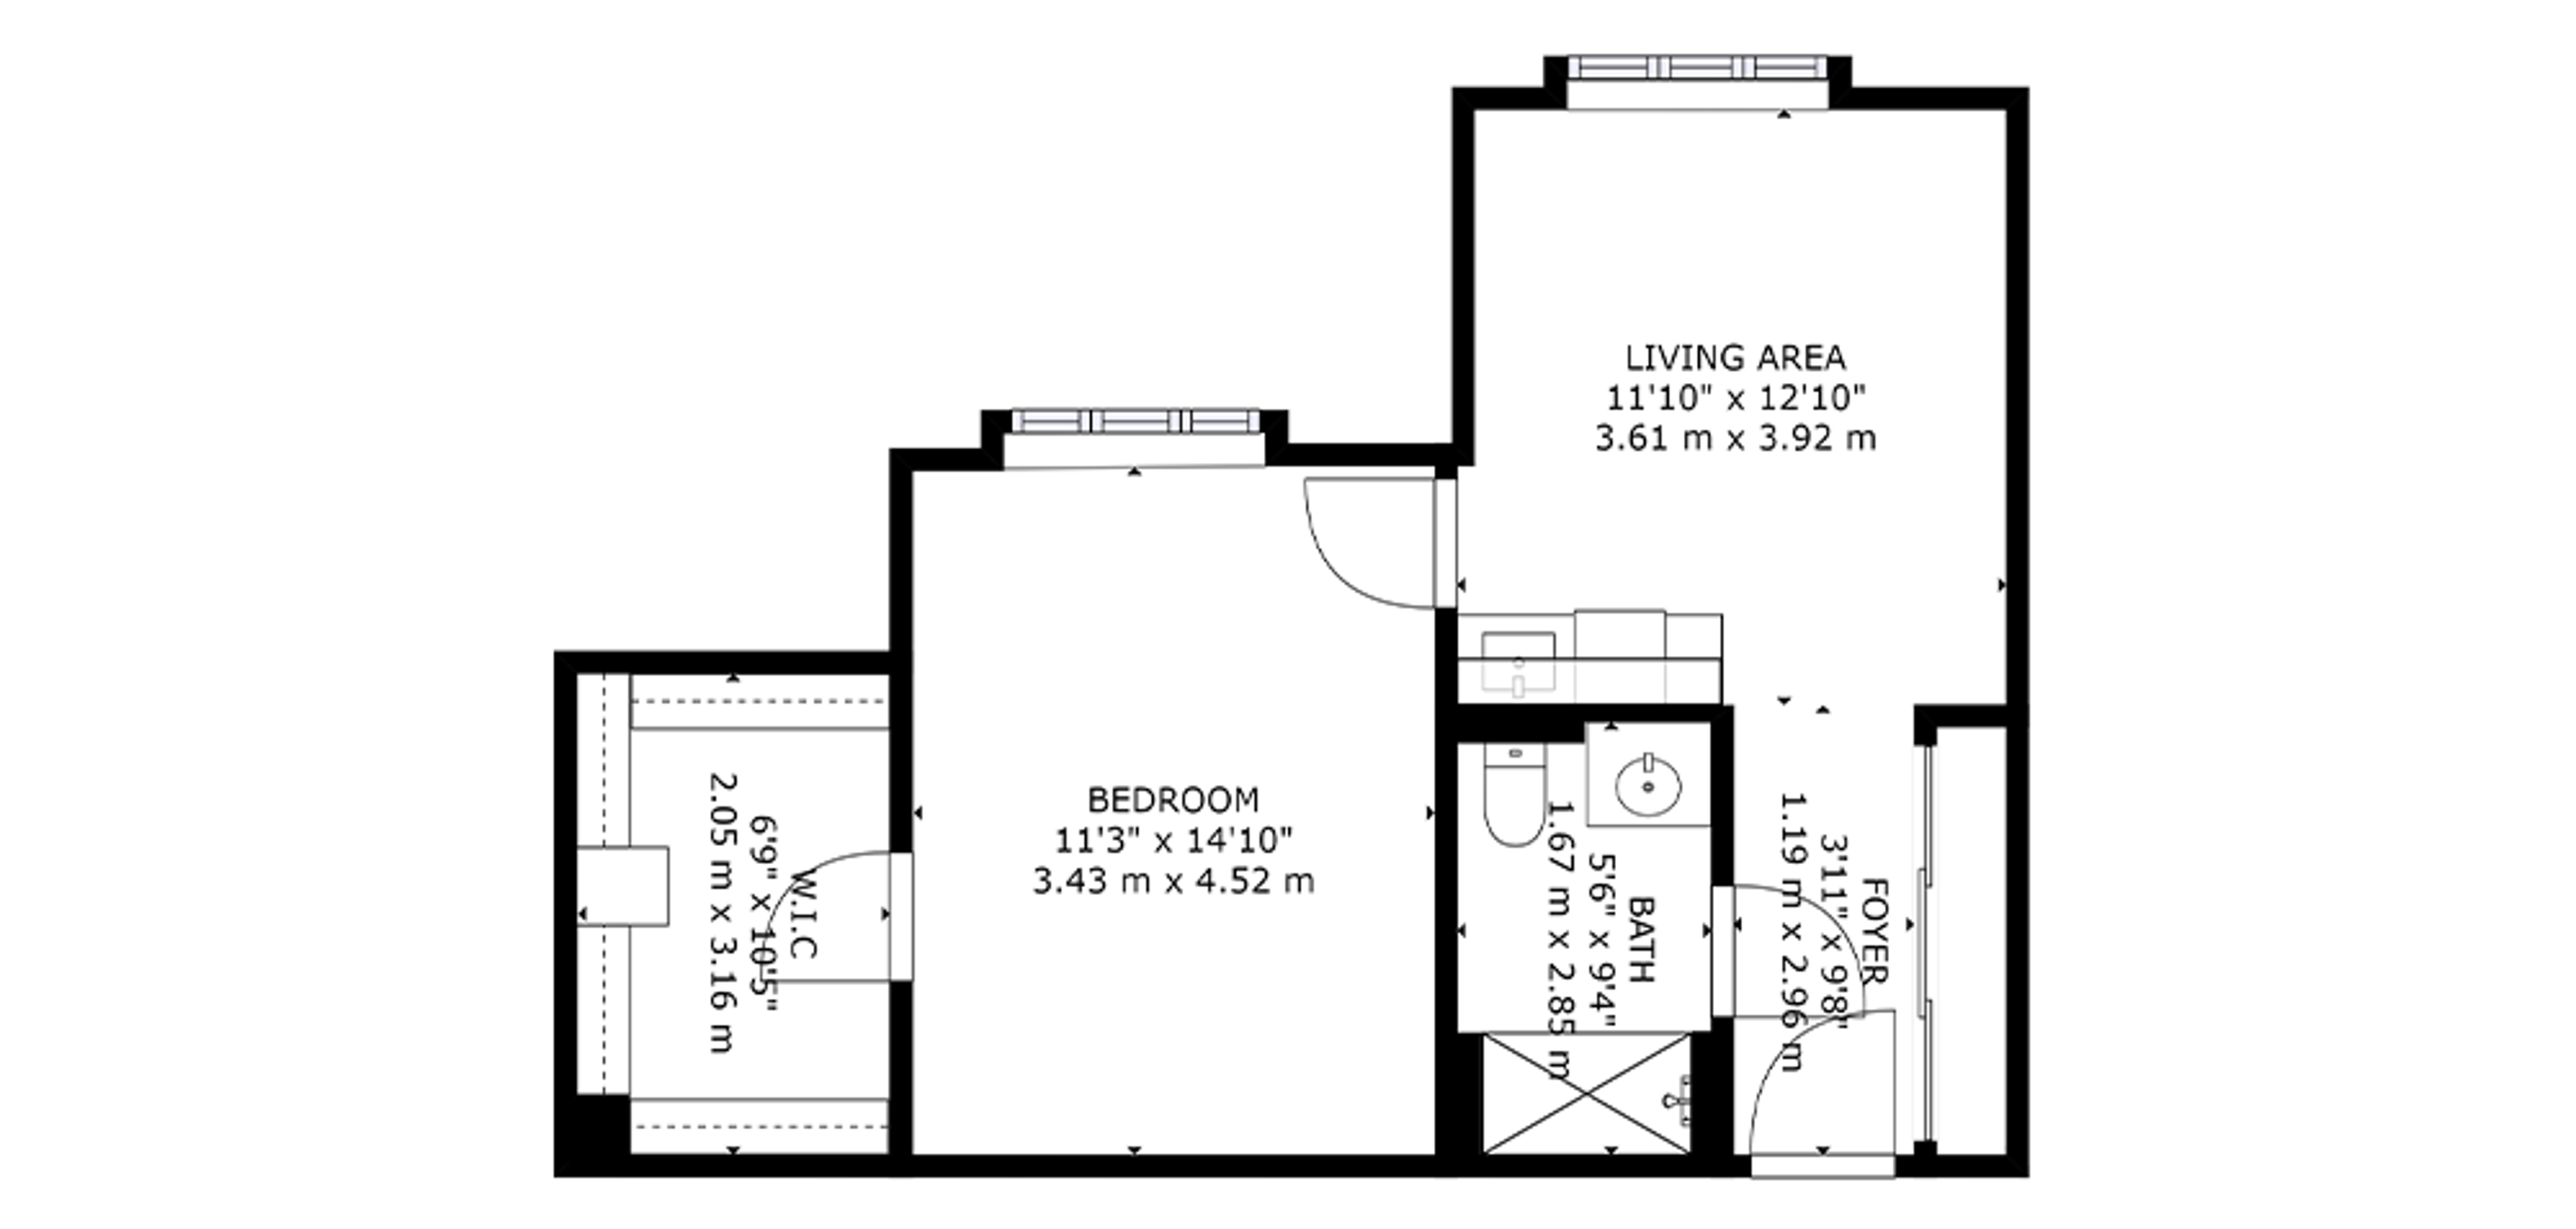 Portobello Sample 1 Bedroom Plan